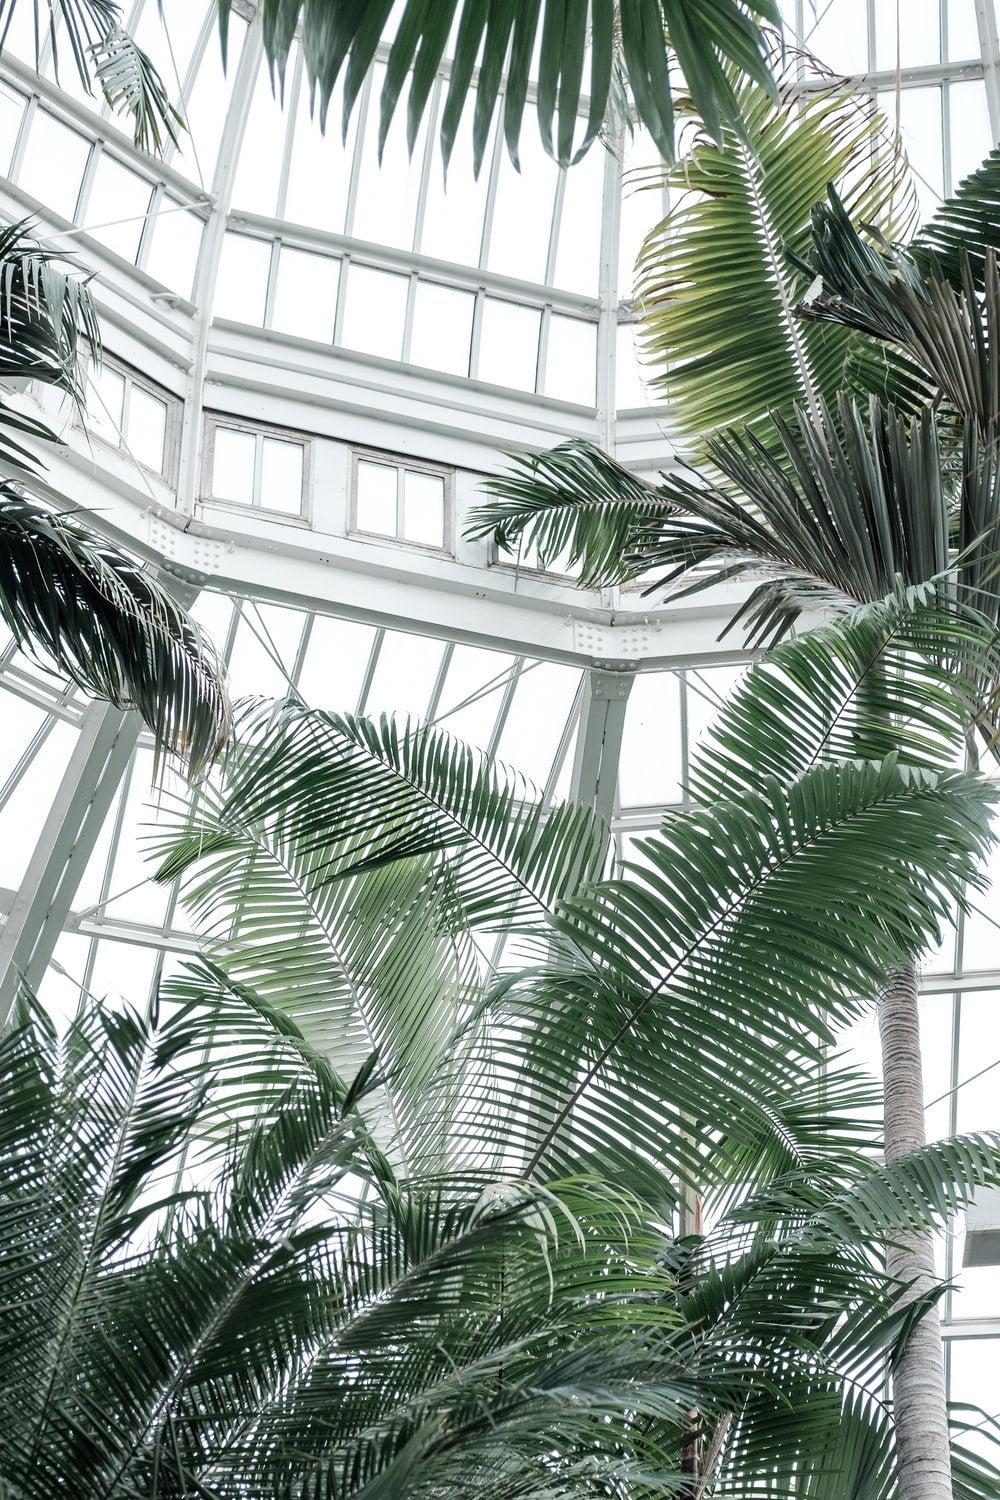 Tall plants inside a greenhouse